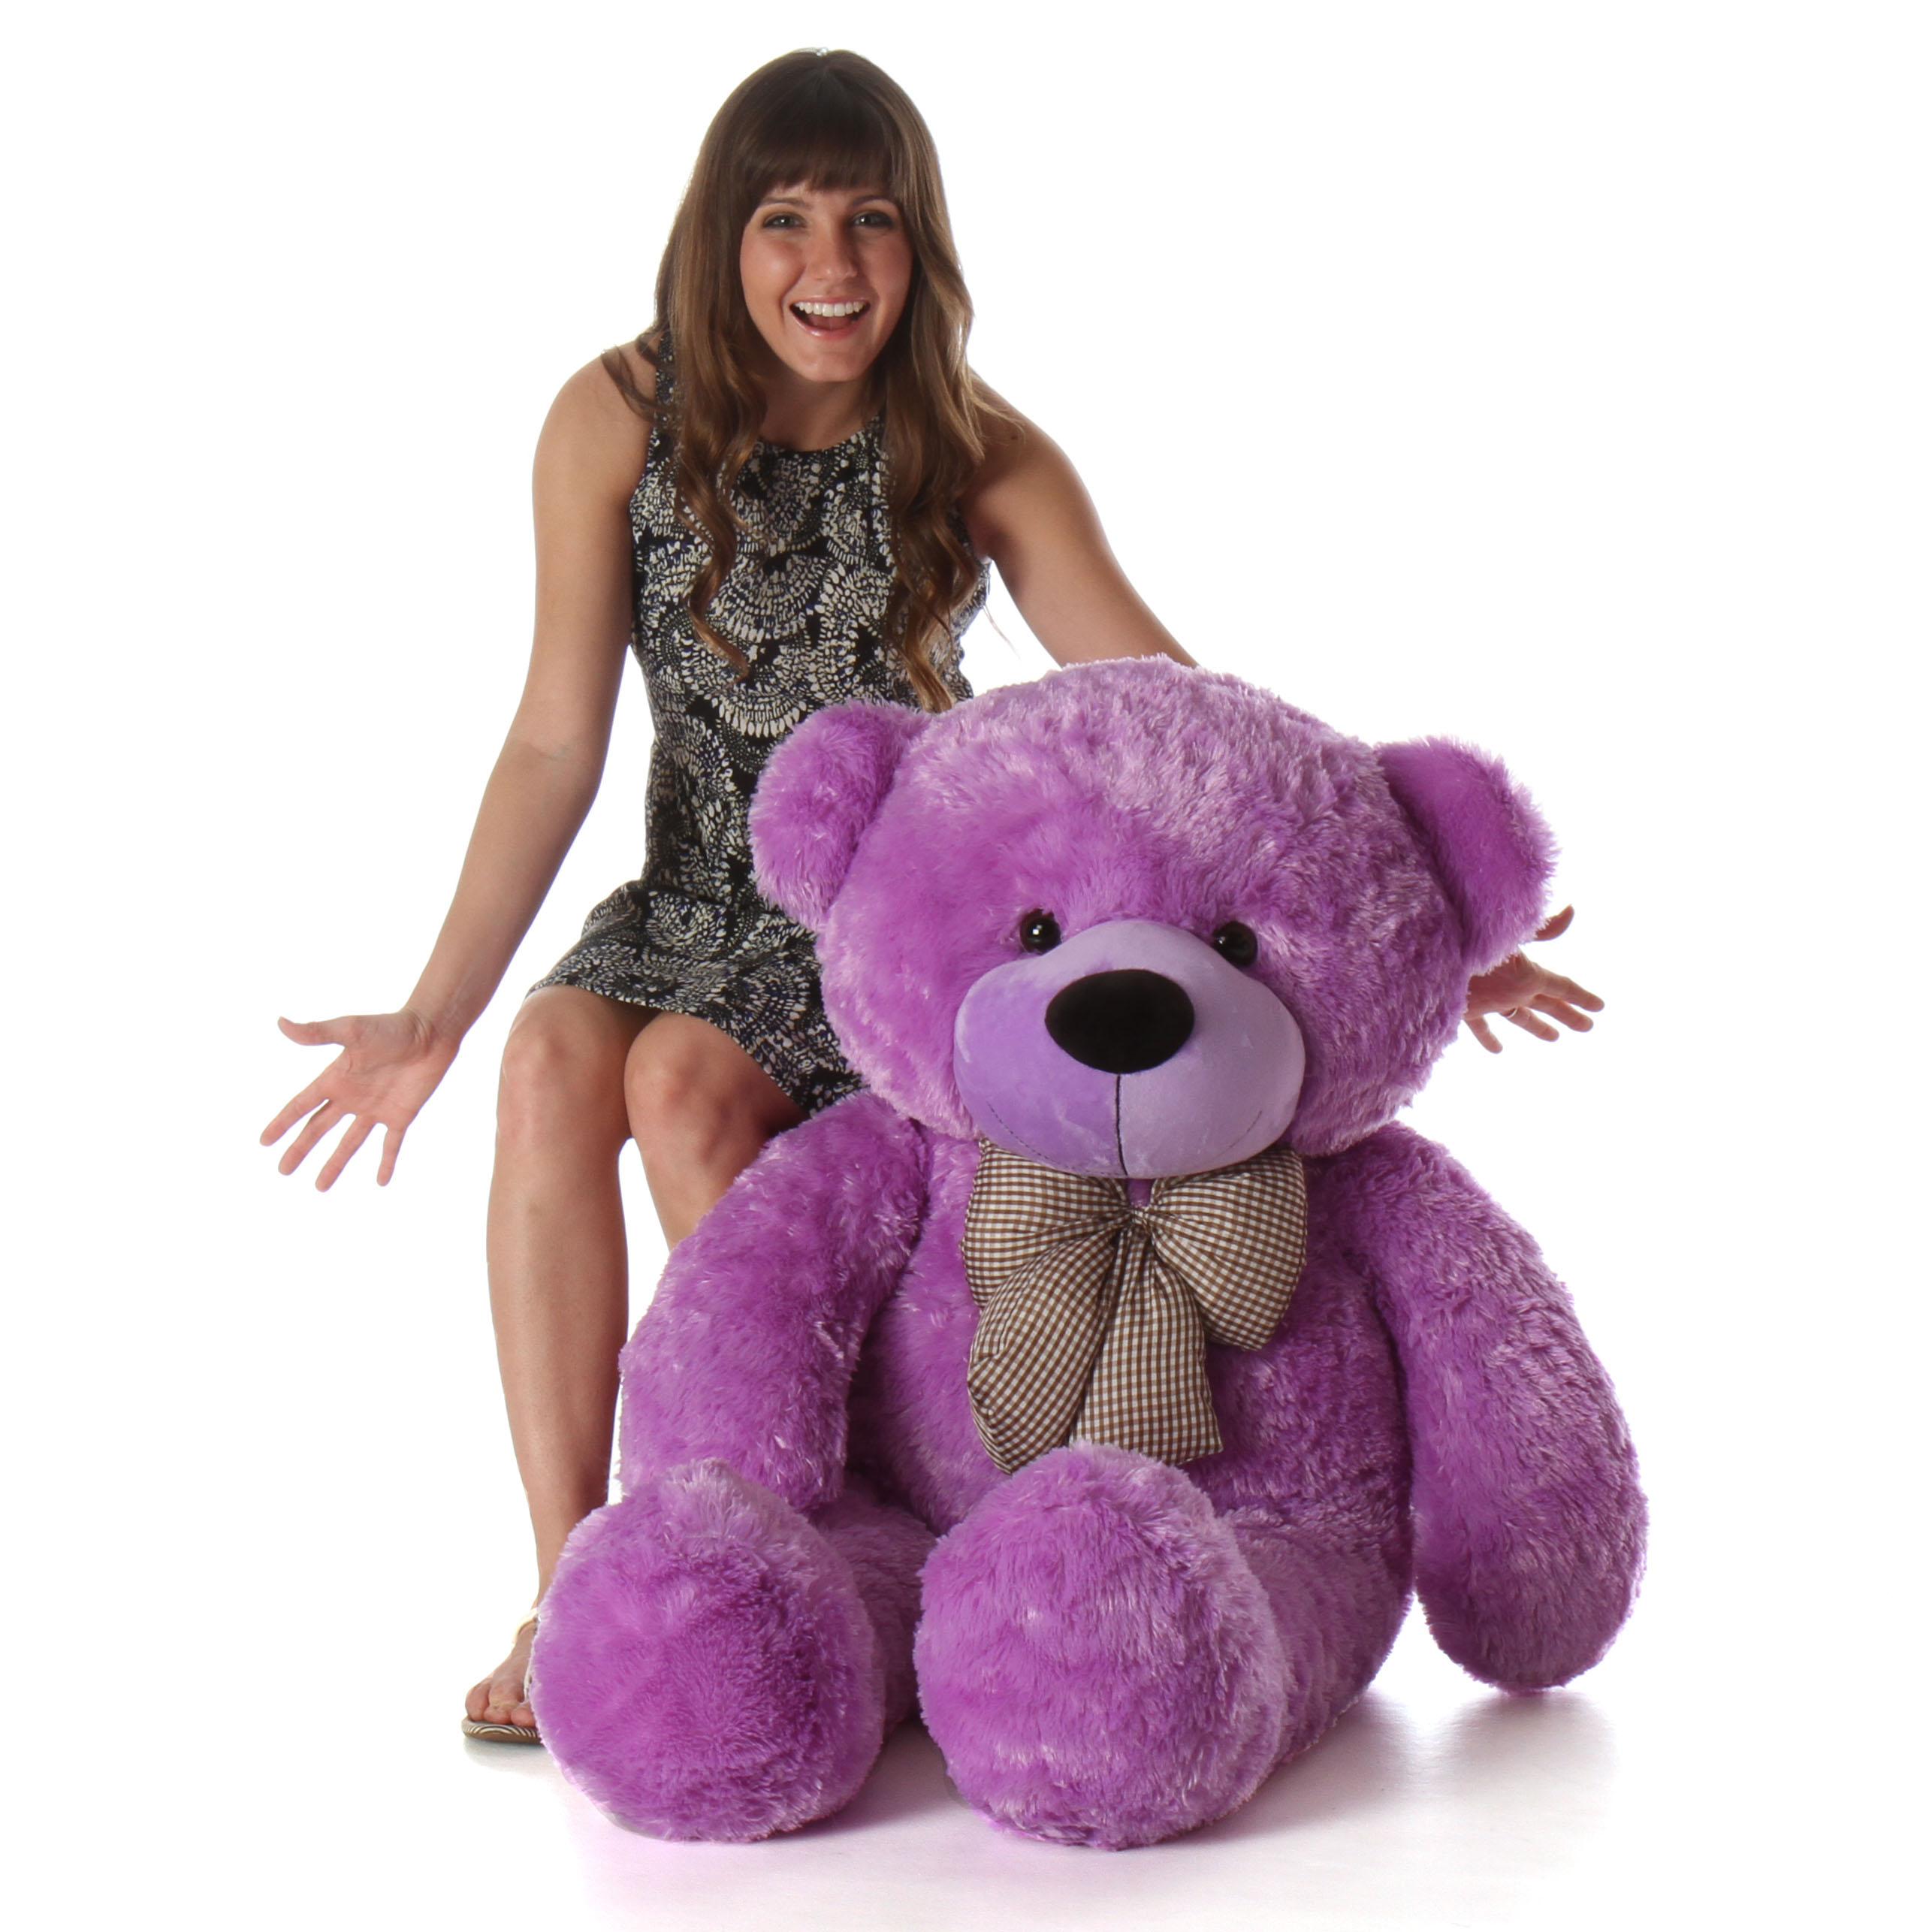 48in-huge-purple-teddy-bear-deedee-cuddles-is-so-soft-and-snuggly-with-beautiful-fur.jpg